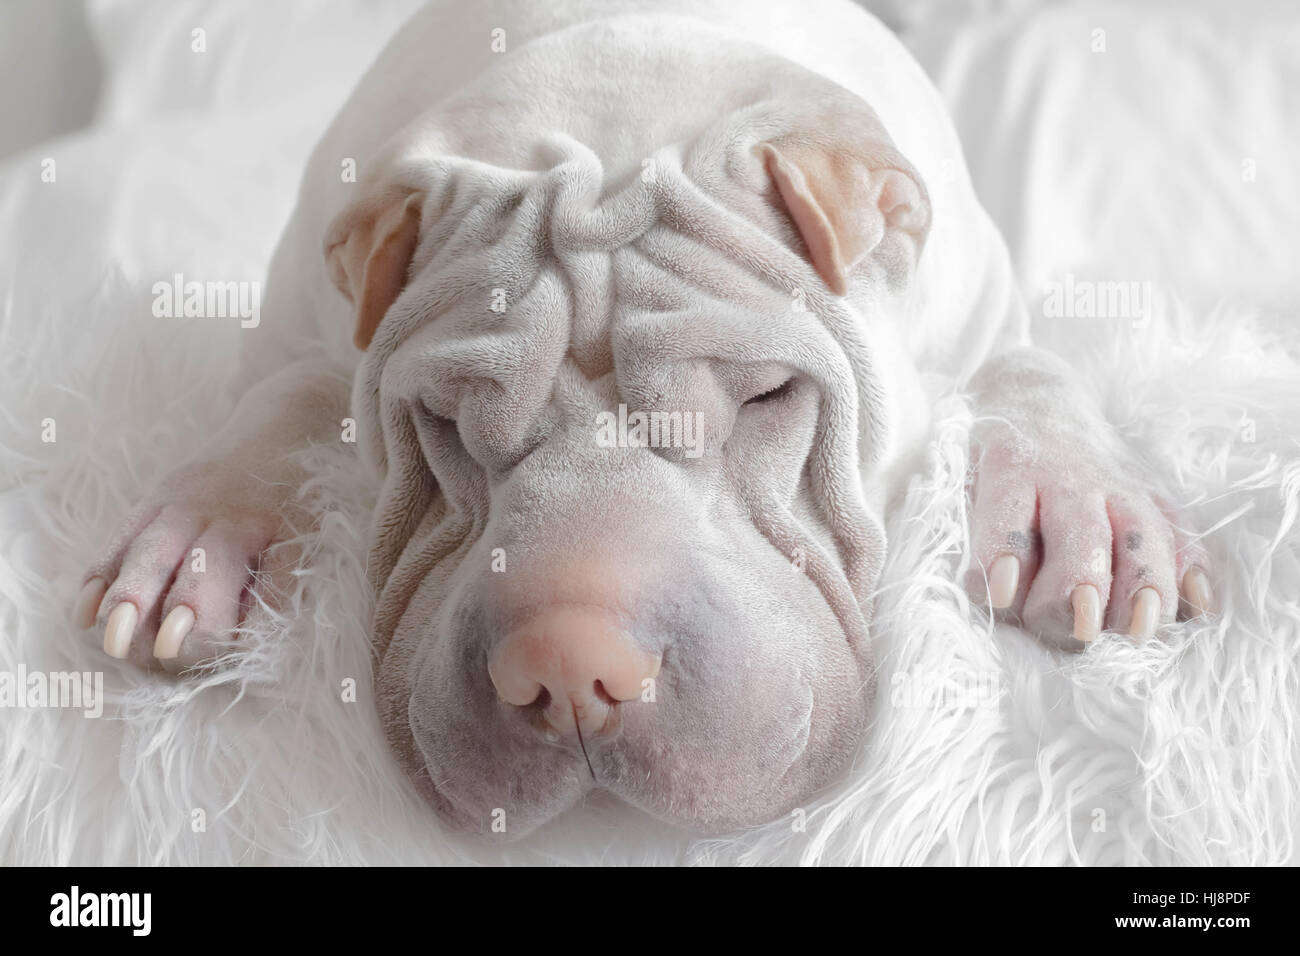 Shar pei dog resting Stock Photo